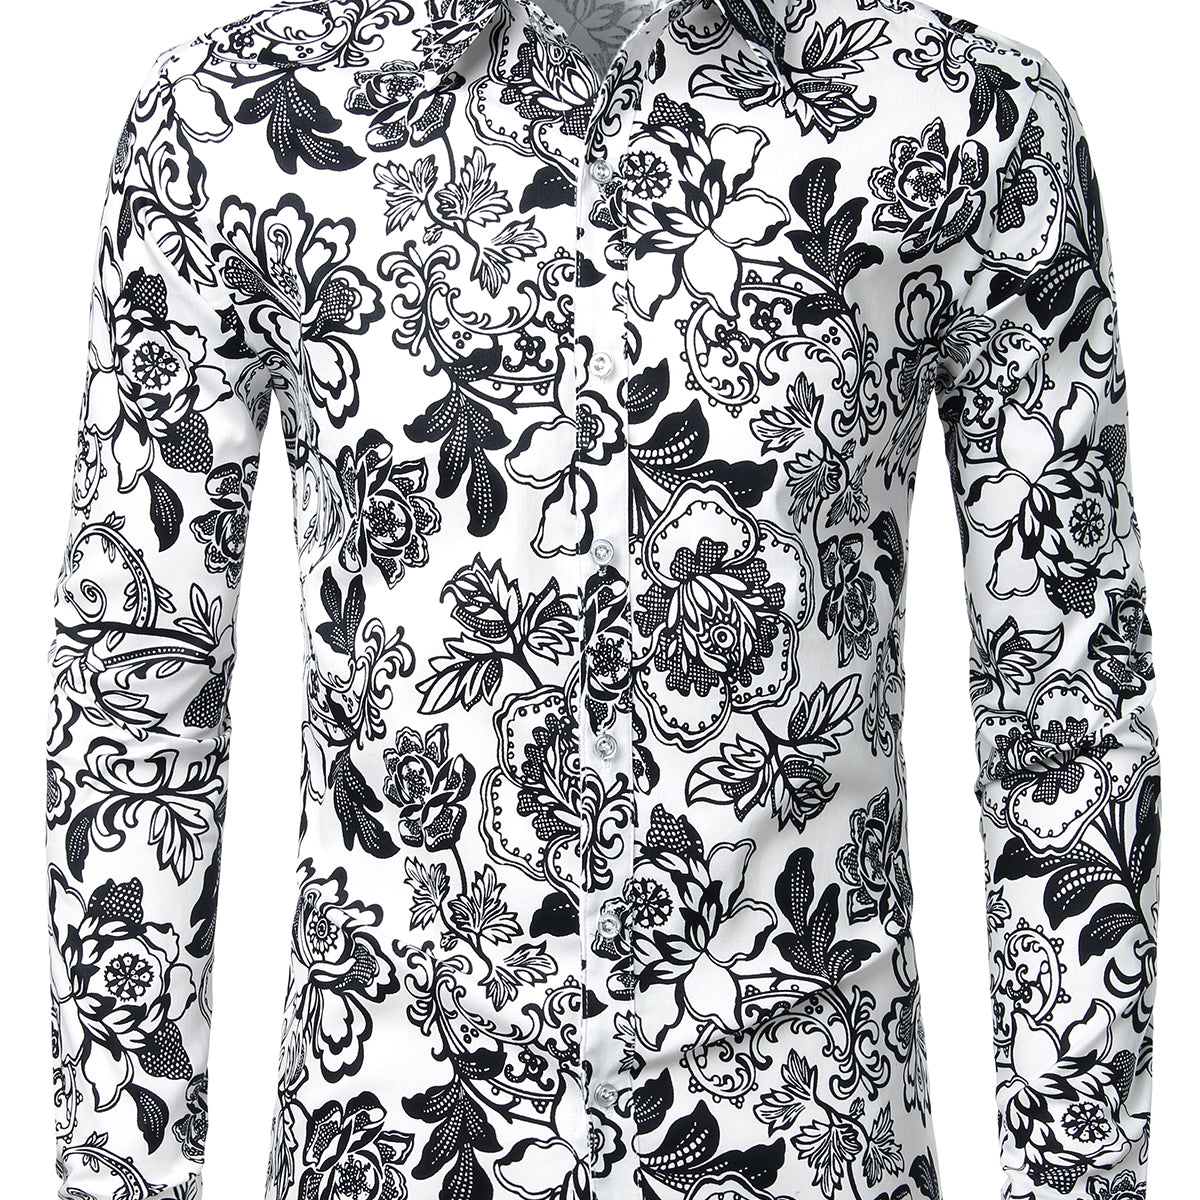 Men's Floral Long Sleeve Cotton Casual Button Down  Shirt